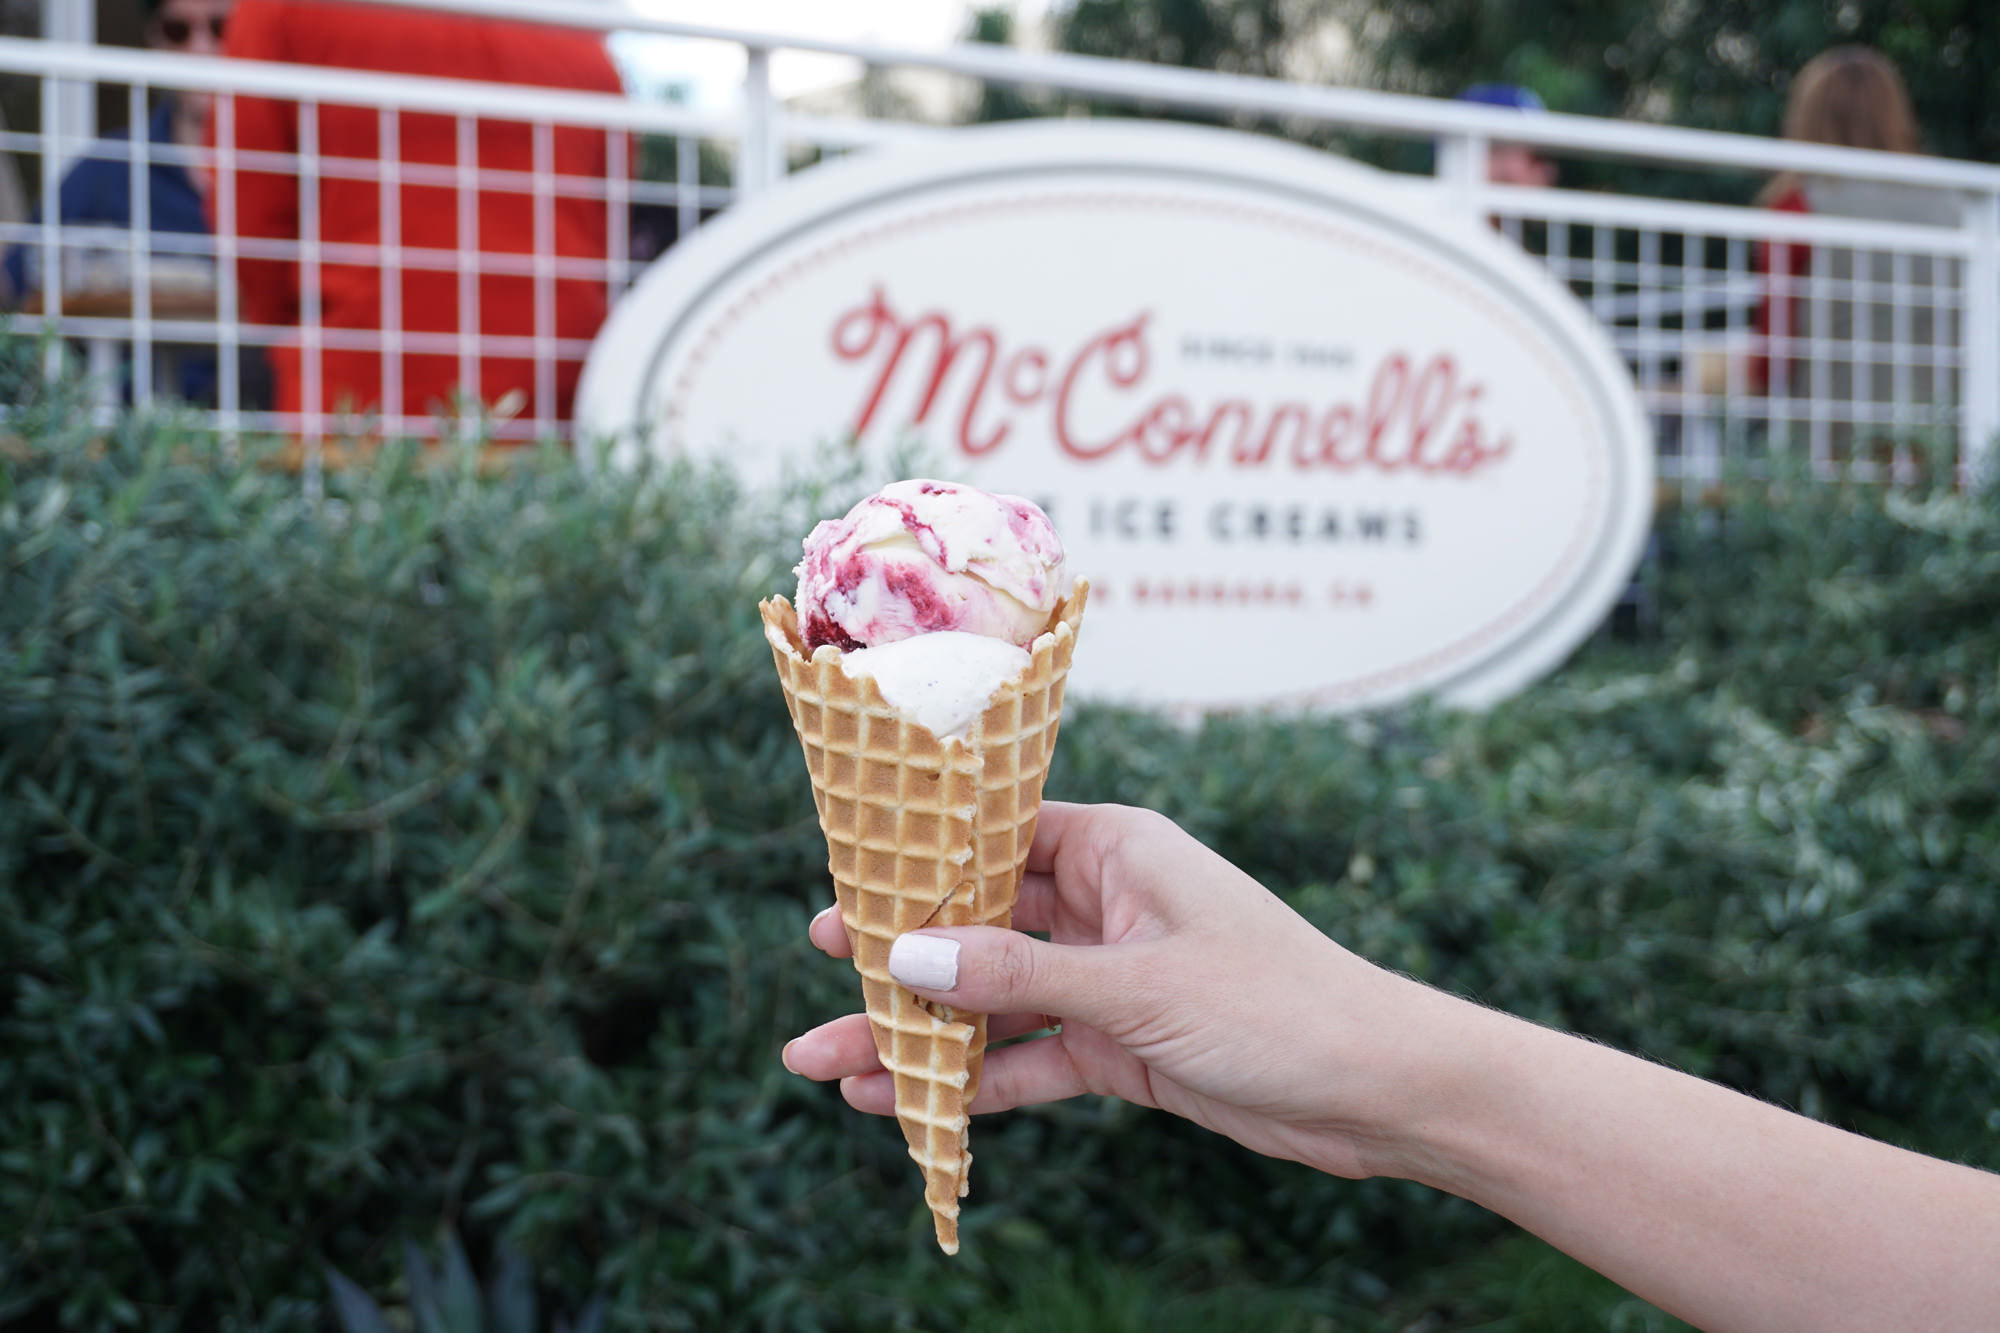 McConnell's Ice Cream in Los Feliz